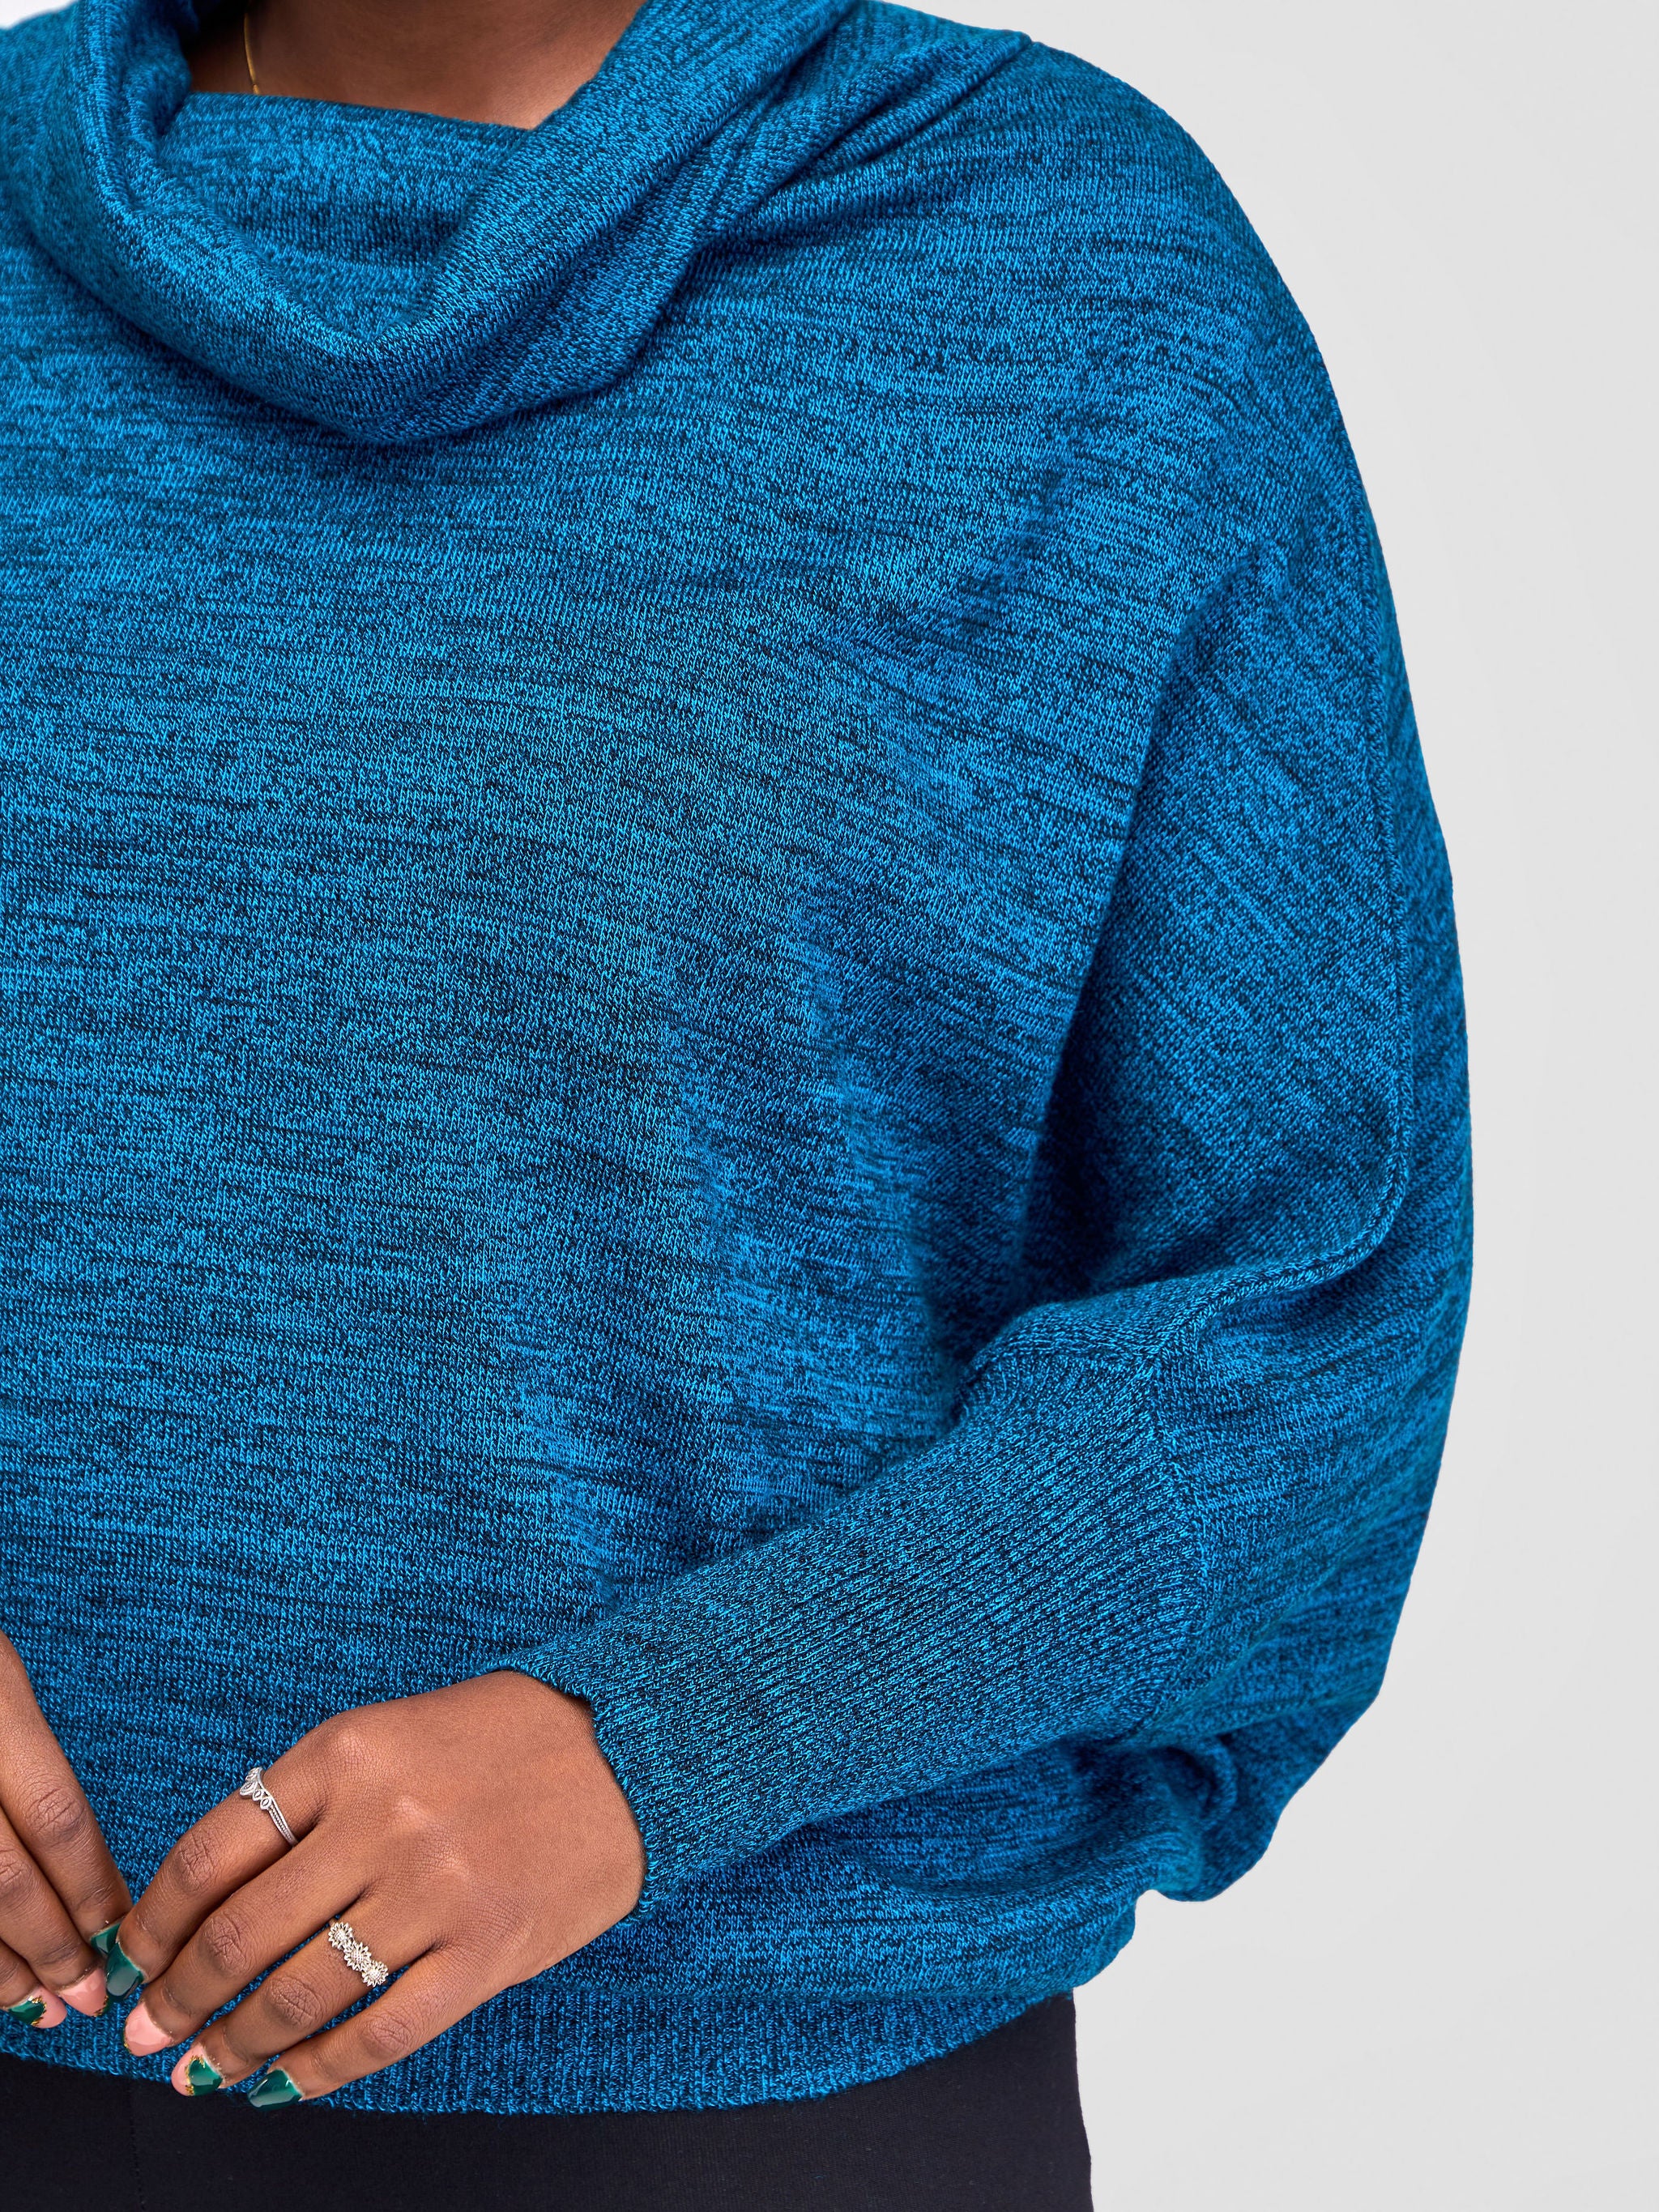 Vivo Basic Short Dolman Sweater - Blue / Black